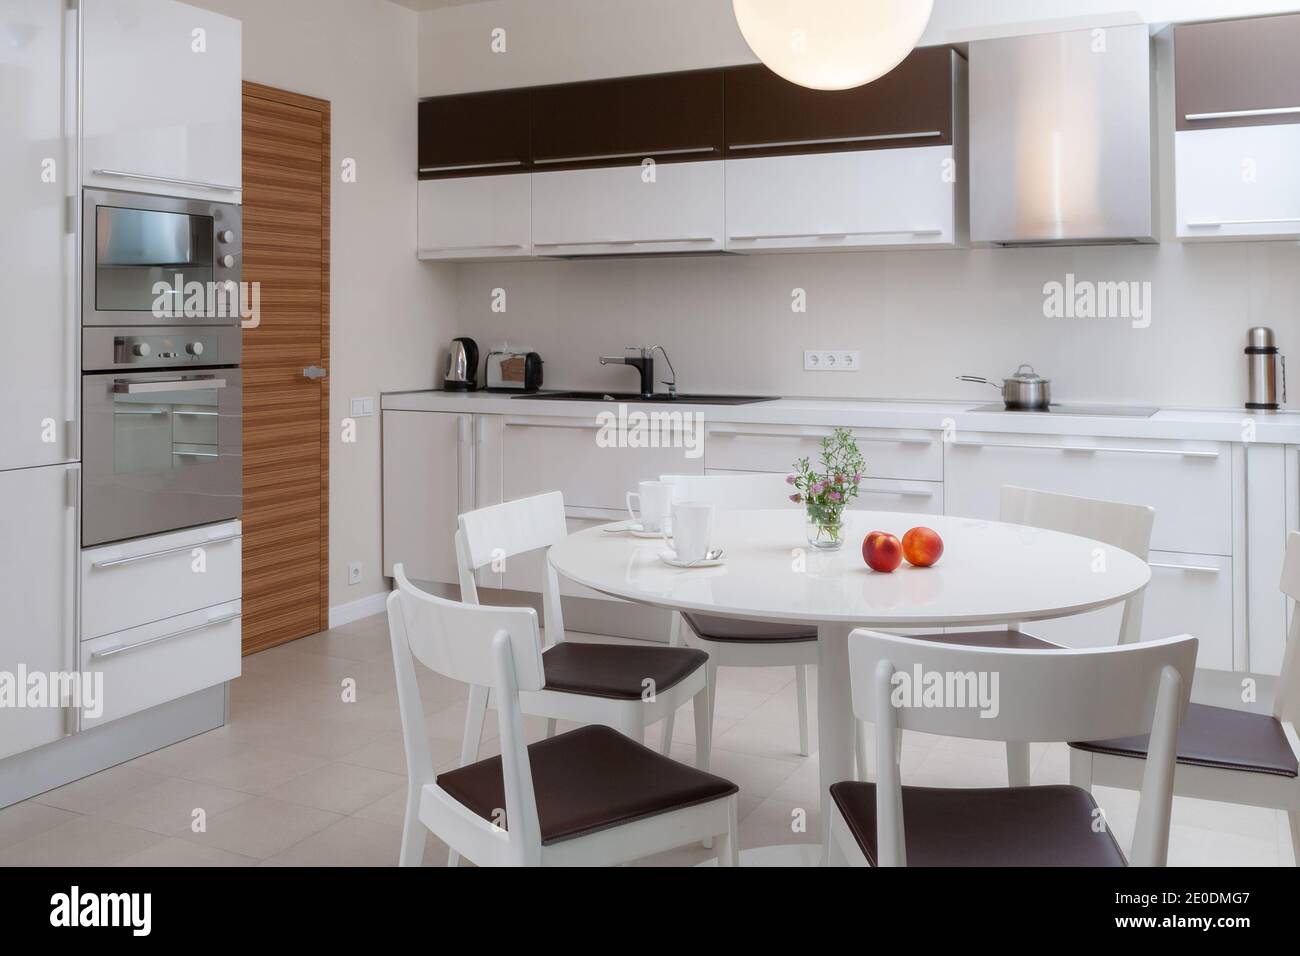 Modern light kitchen interior with white faсade pannels. Kitchen design concept Stock Photo